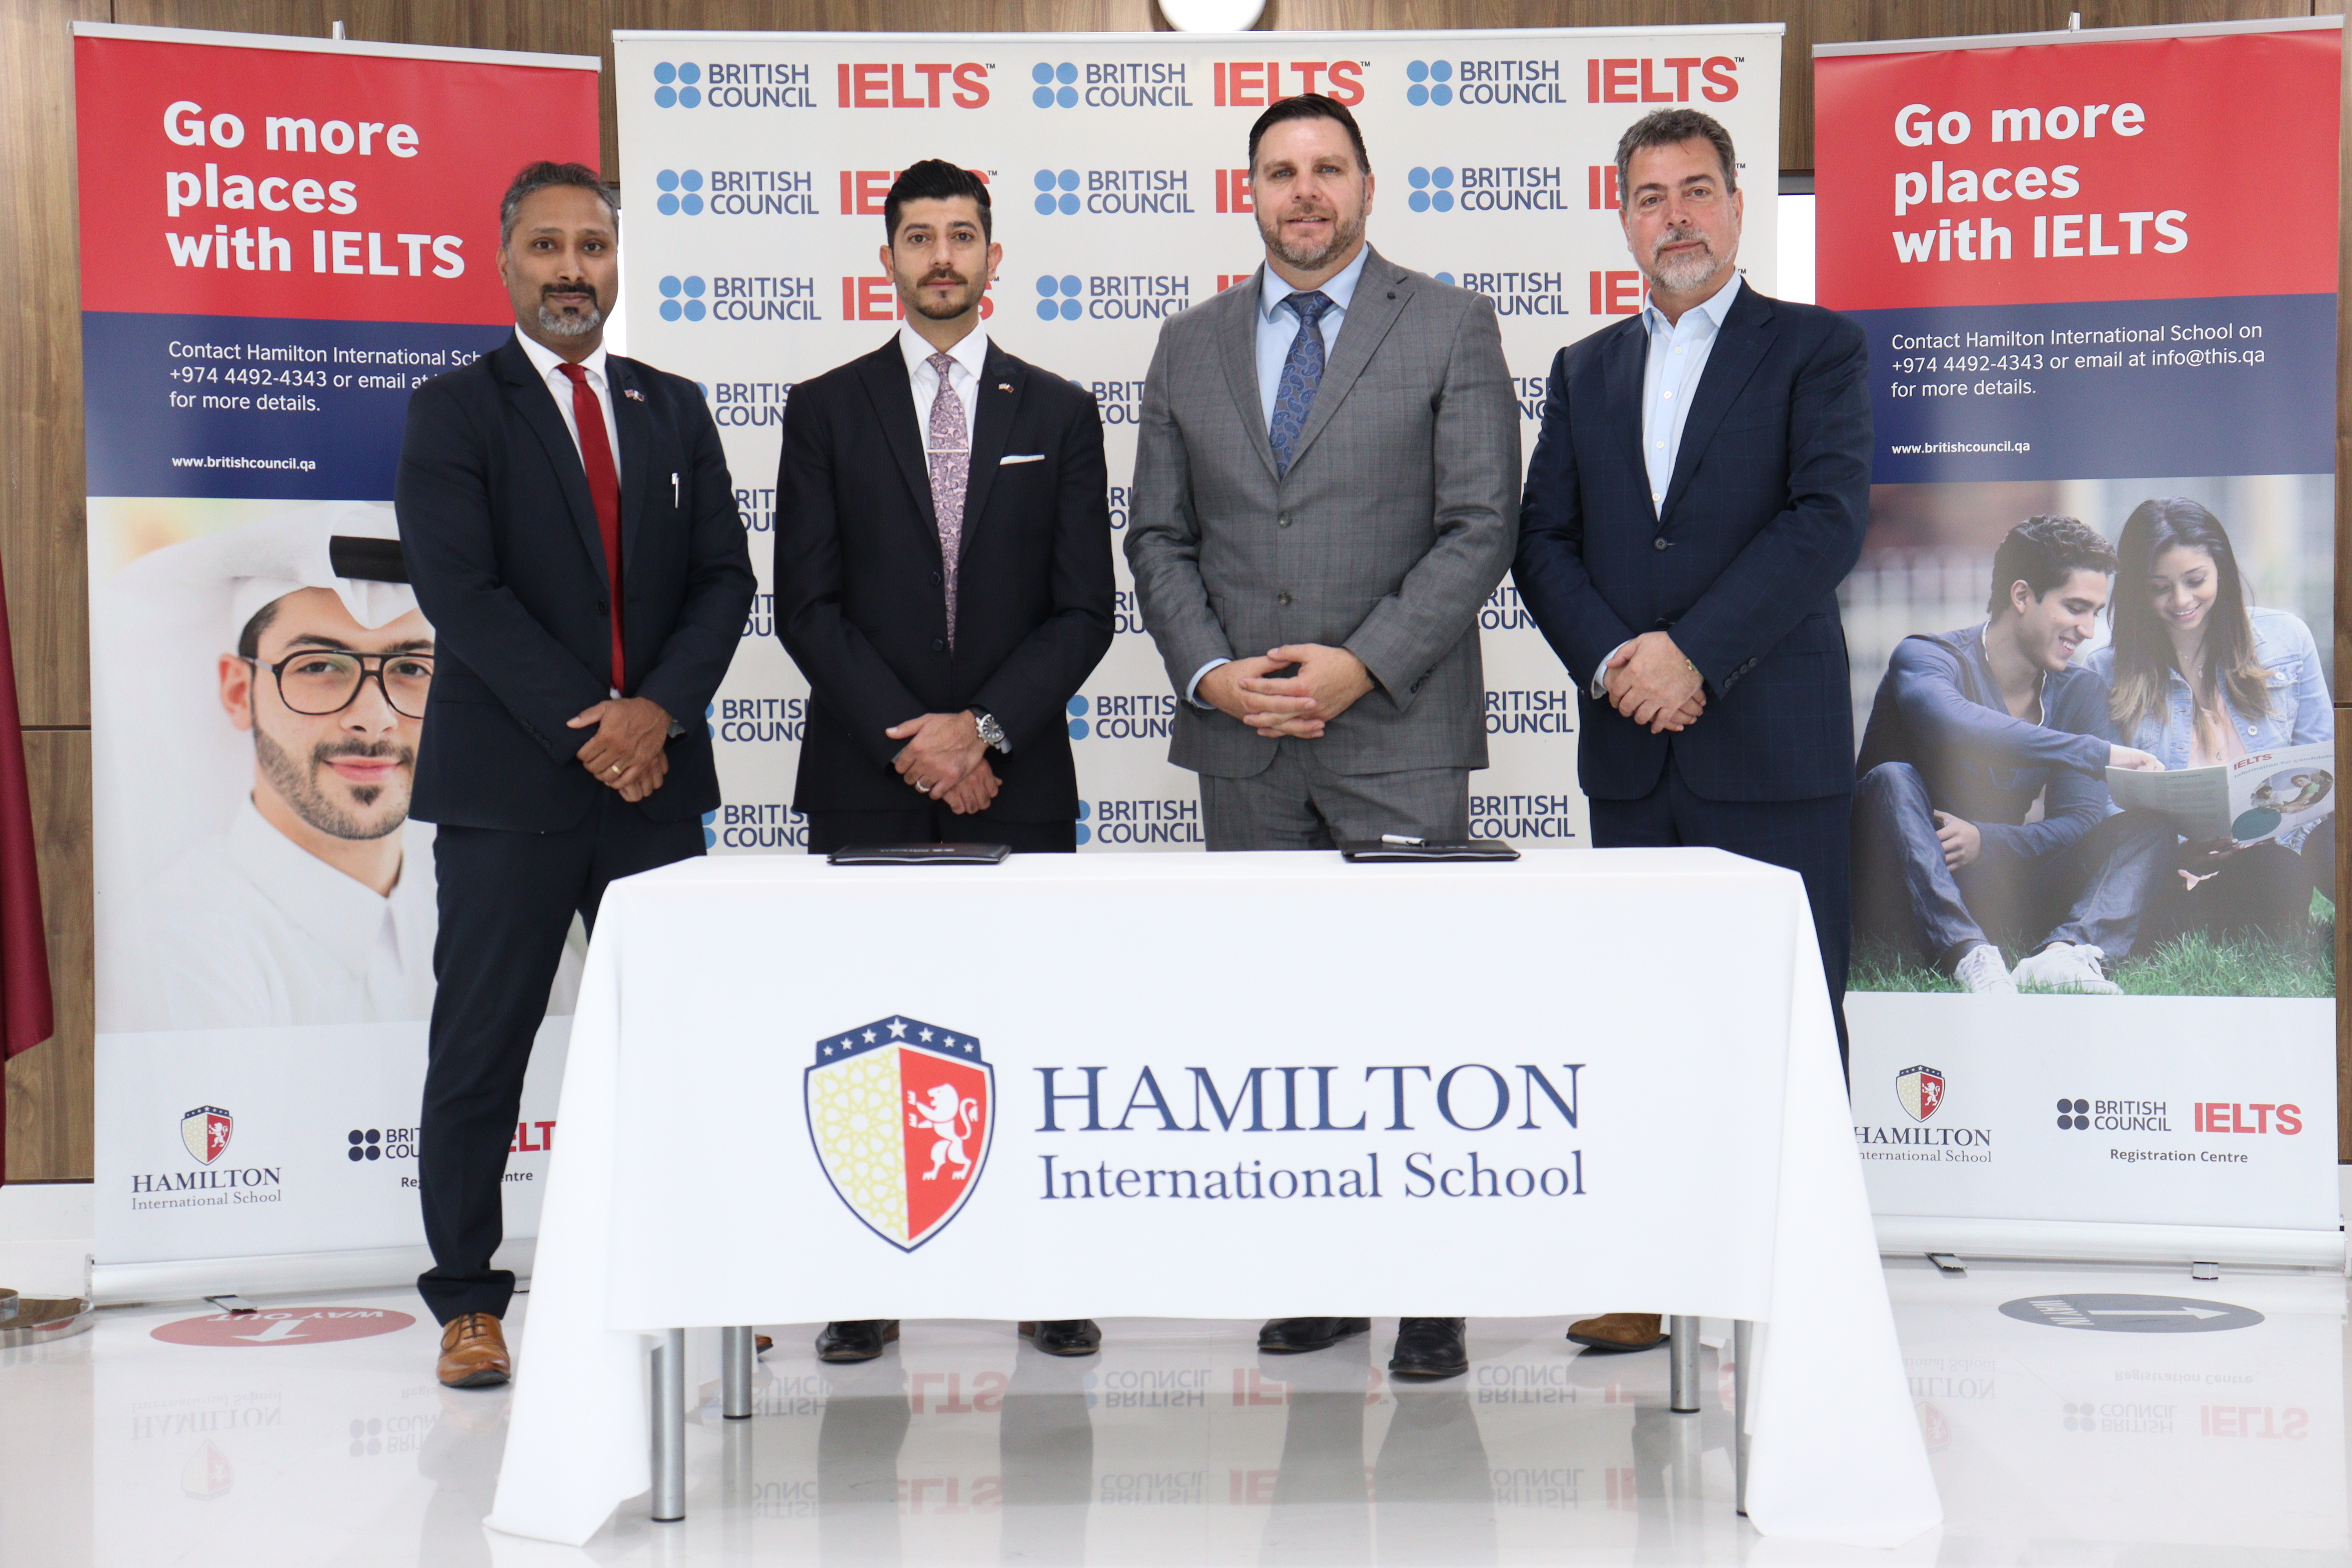 Hamilton Becomes an IELTS Testing Center